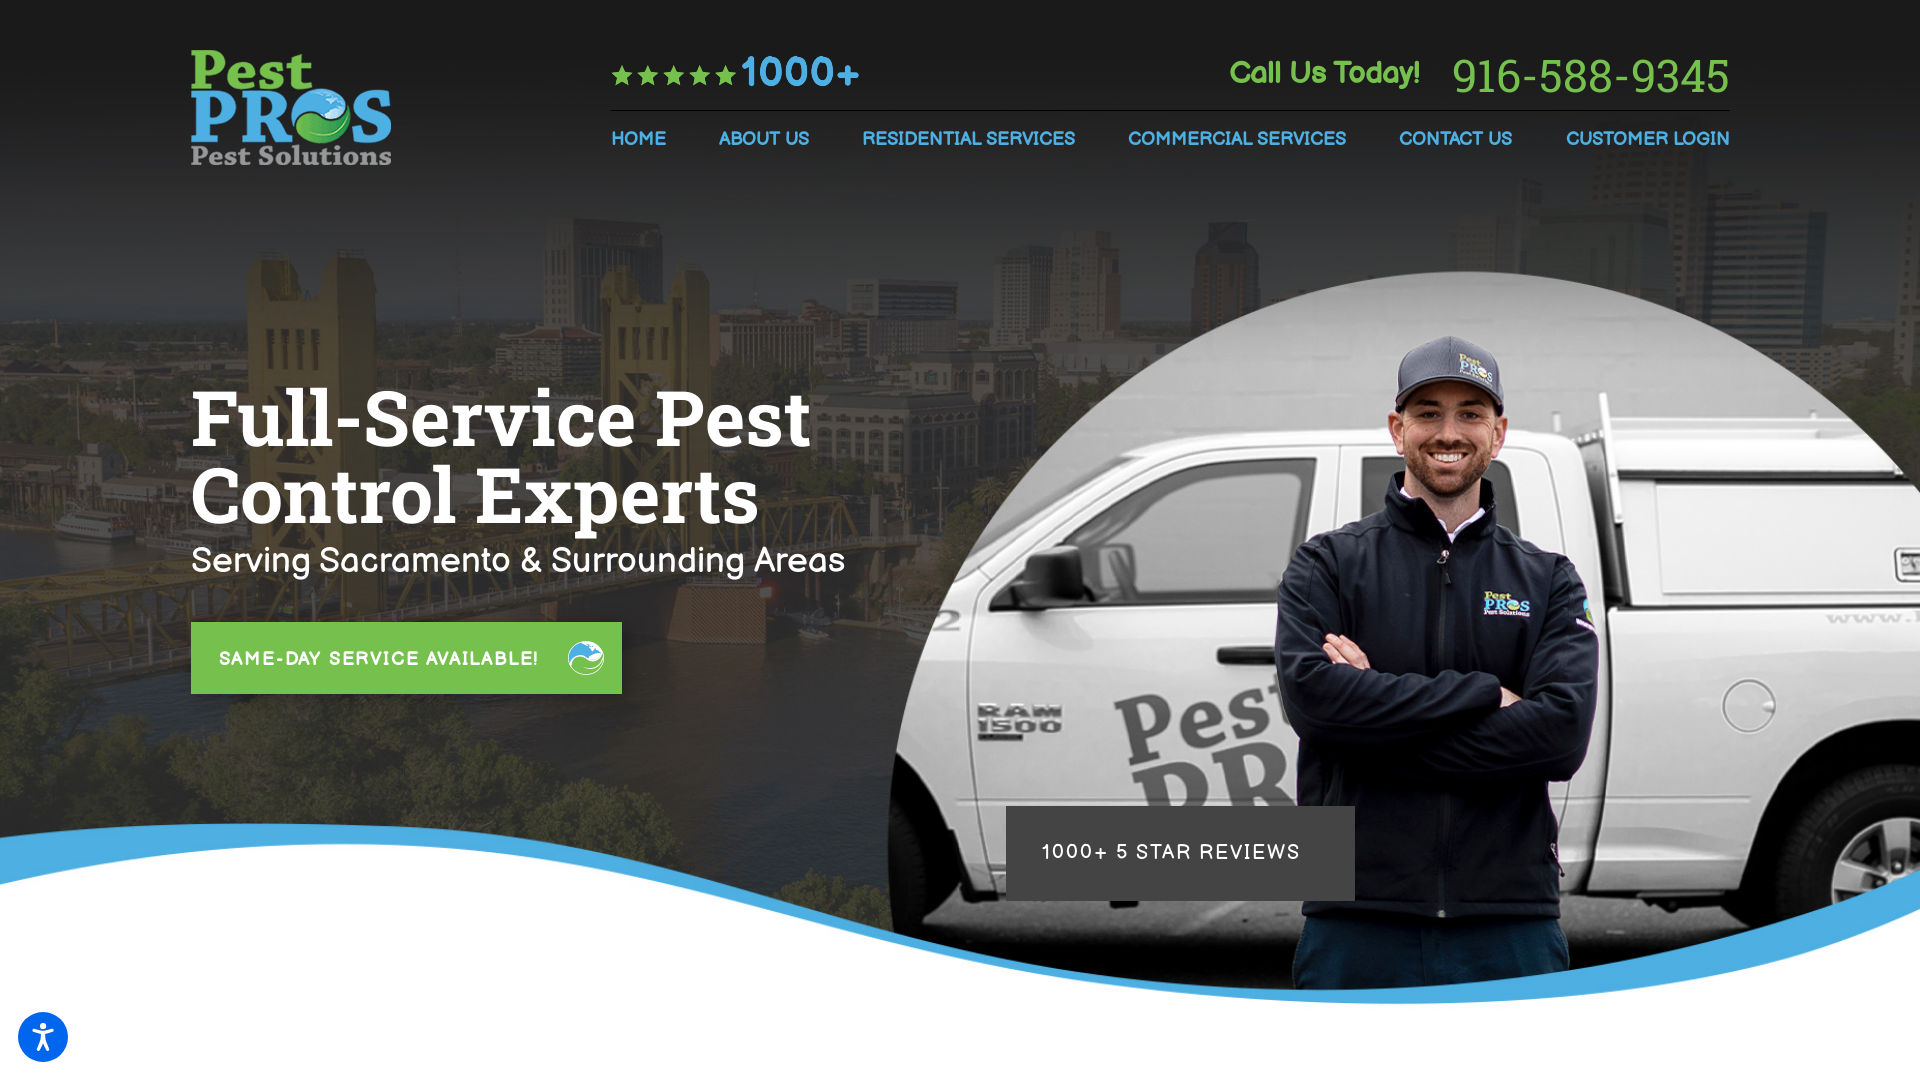 Pest Pros Pest Solutions